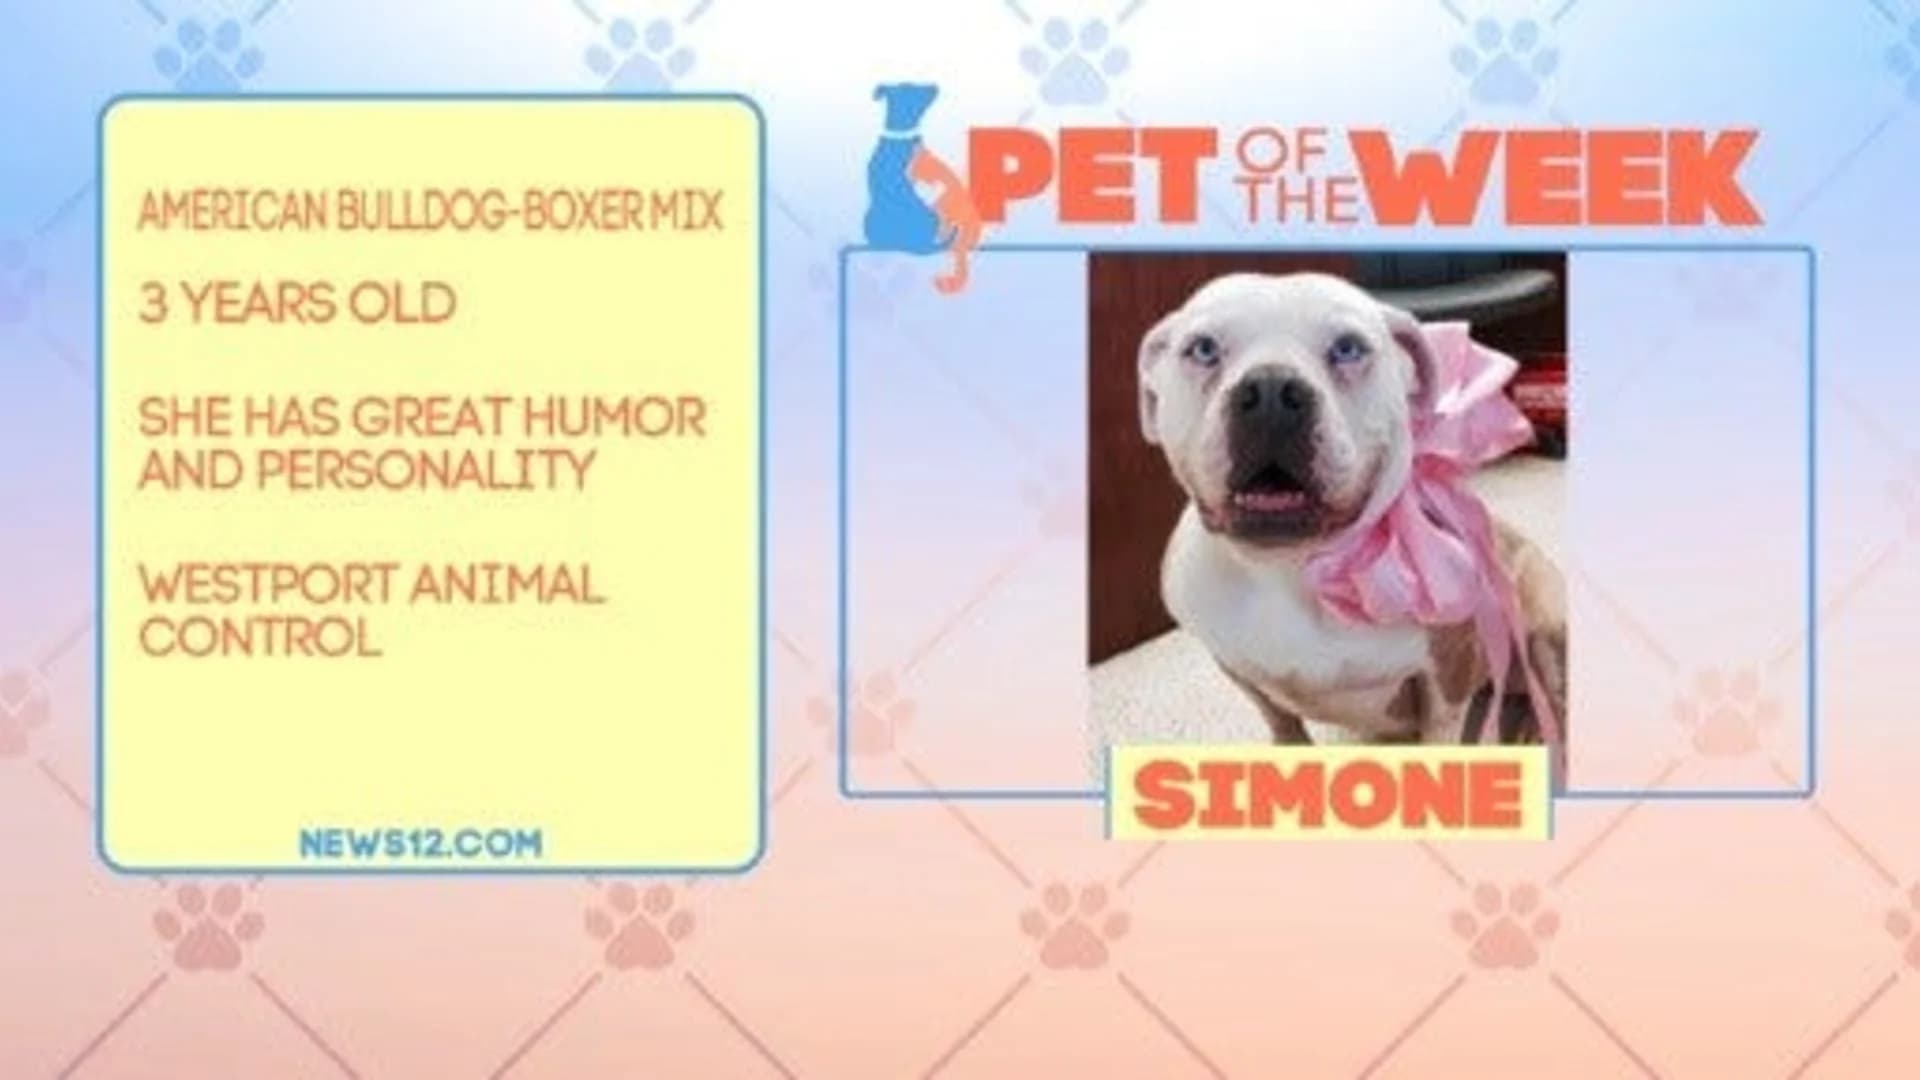 Pet of the Week: Simone